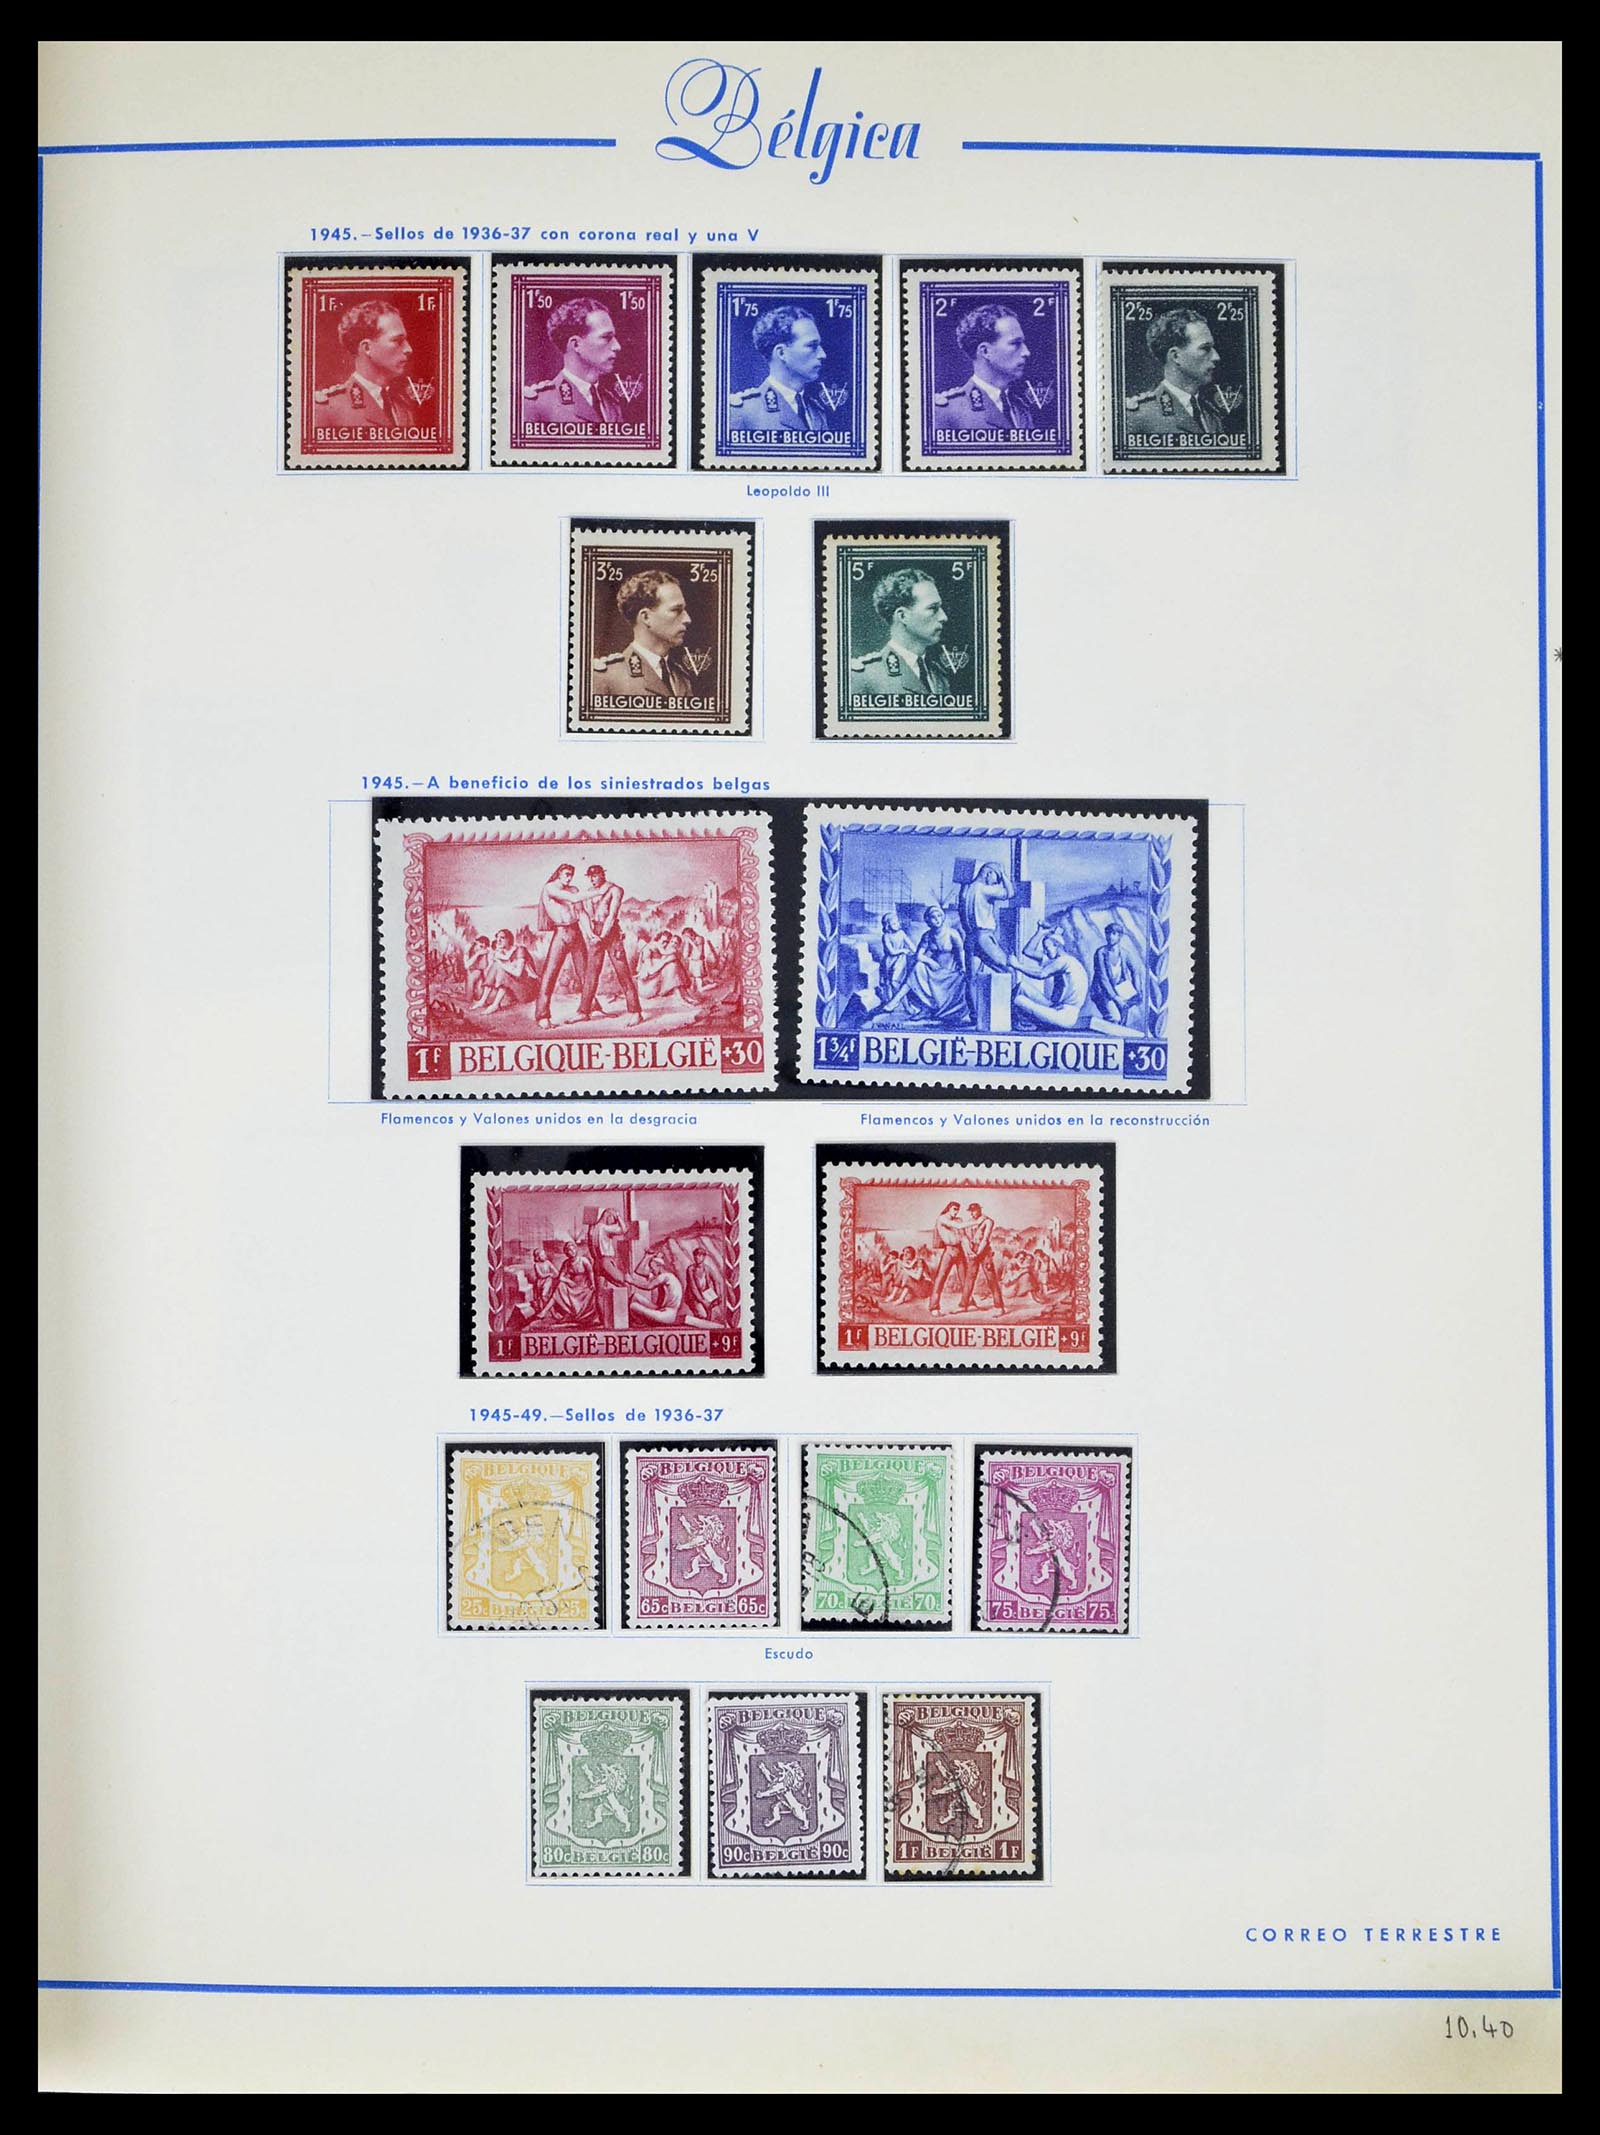 39230 0046 - Stamp collection 39230 Belgium 1849-1976.